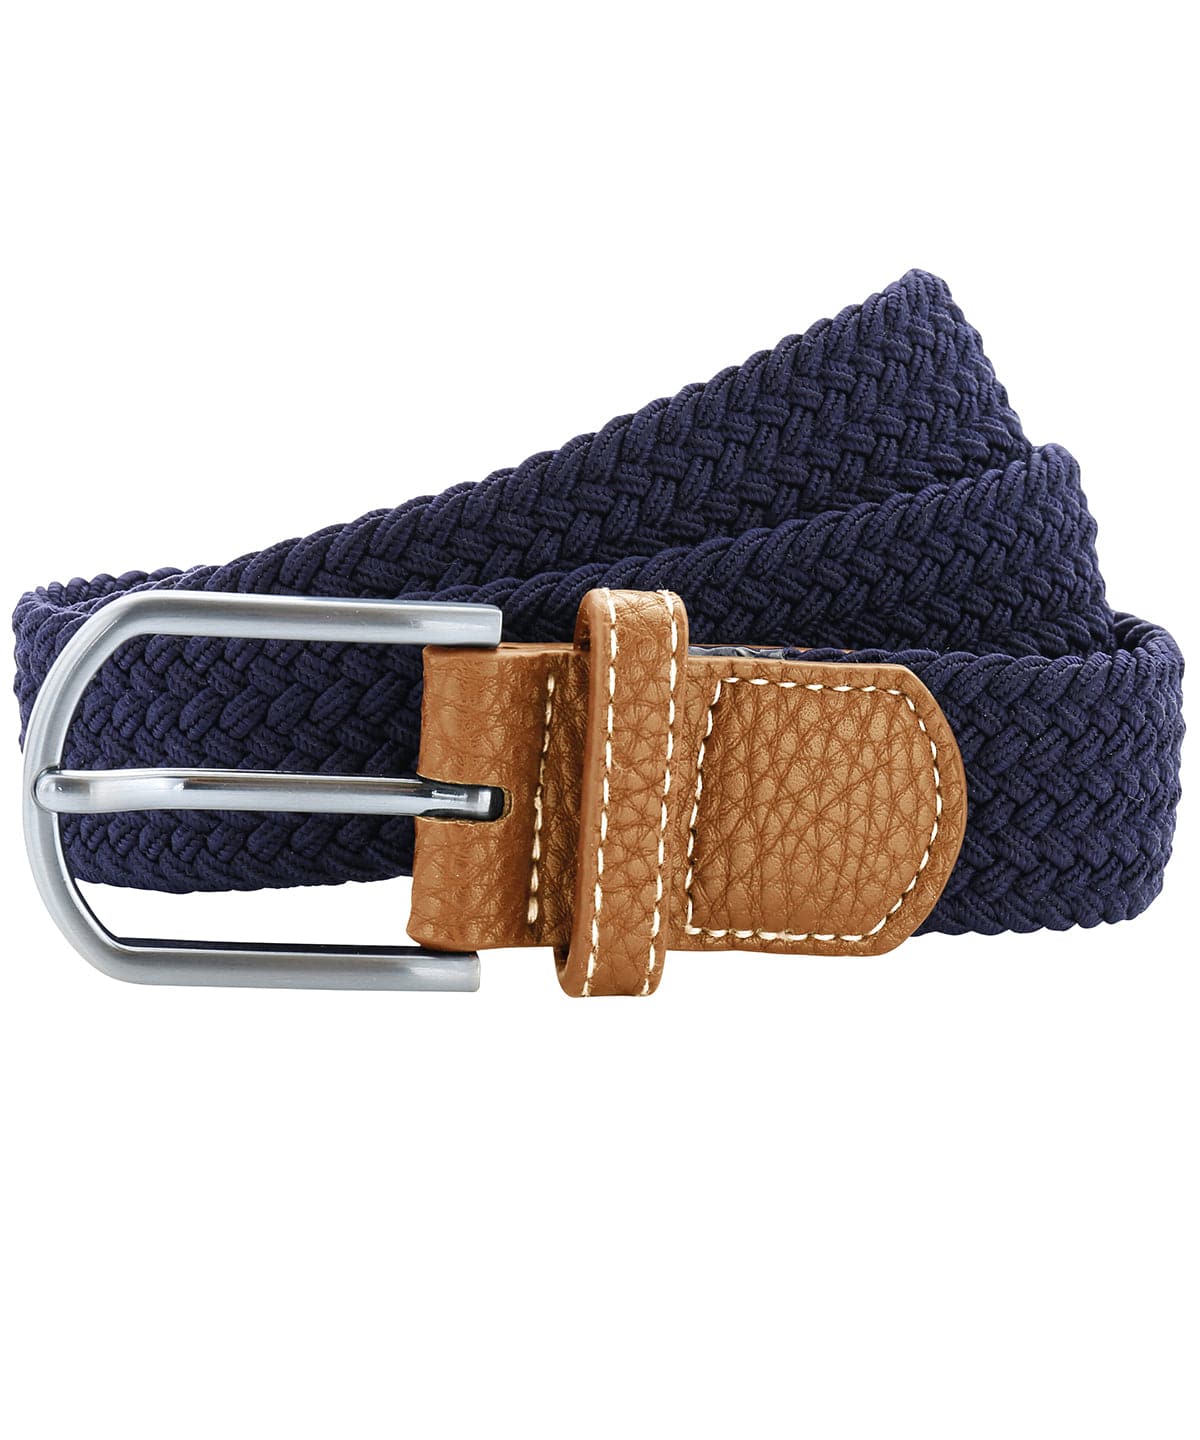 Navy - Braid stretch belt